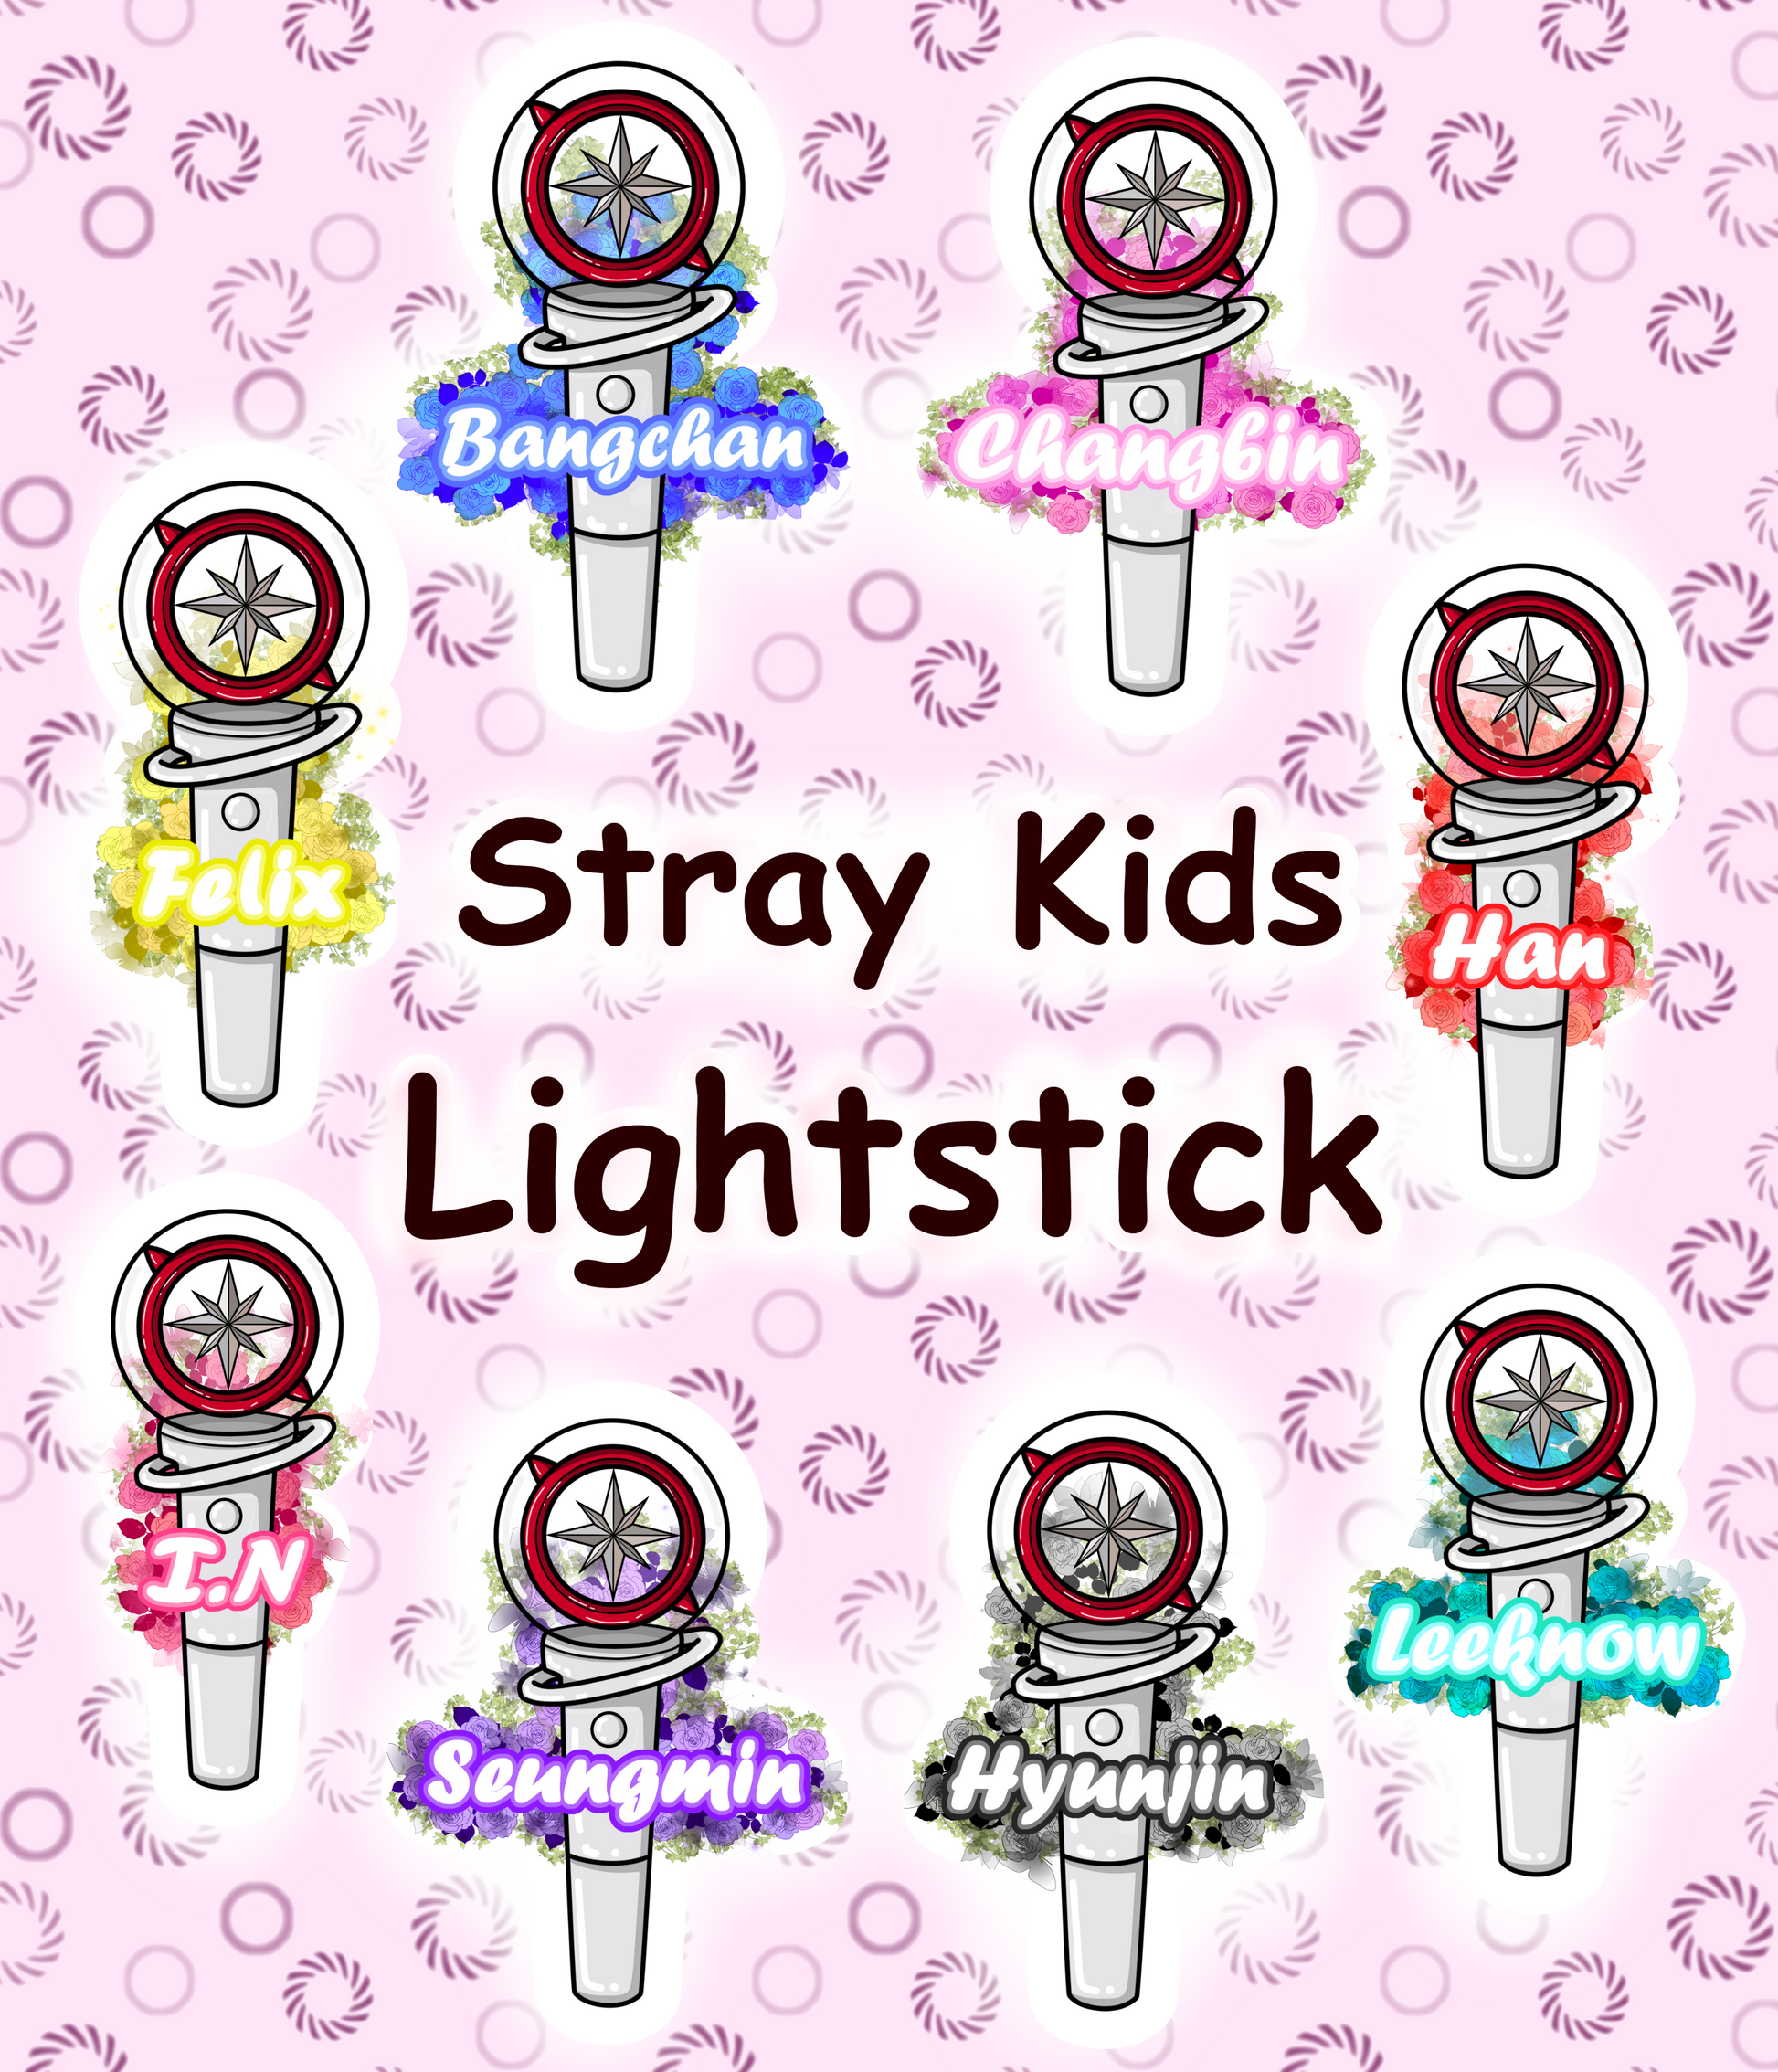 Stray Kids Lightstick 